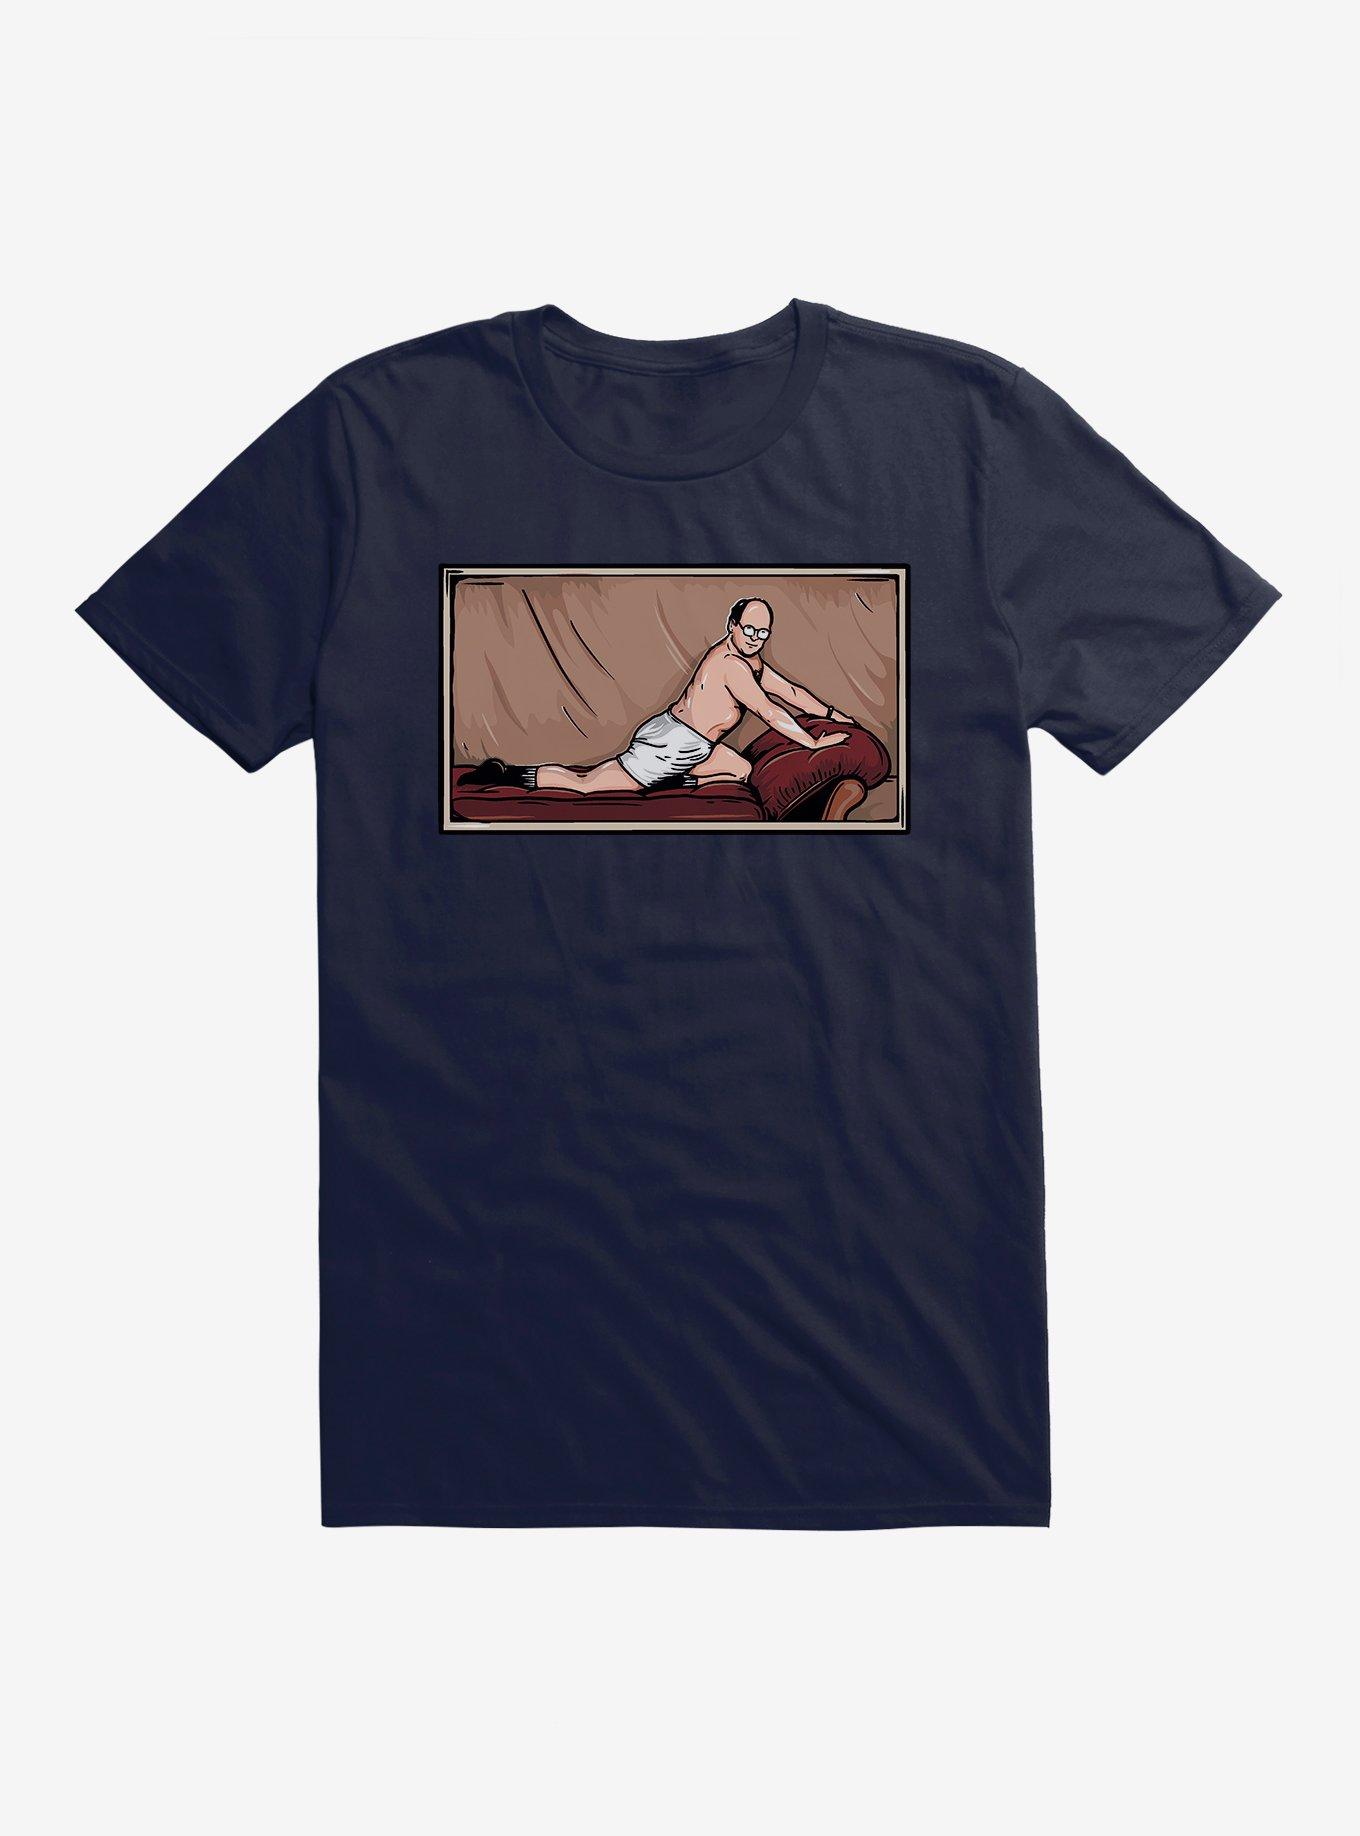 Seinfeld Timeless Art Of Seduction T-Shirt